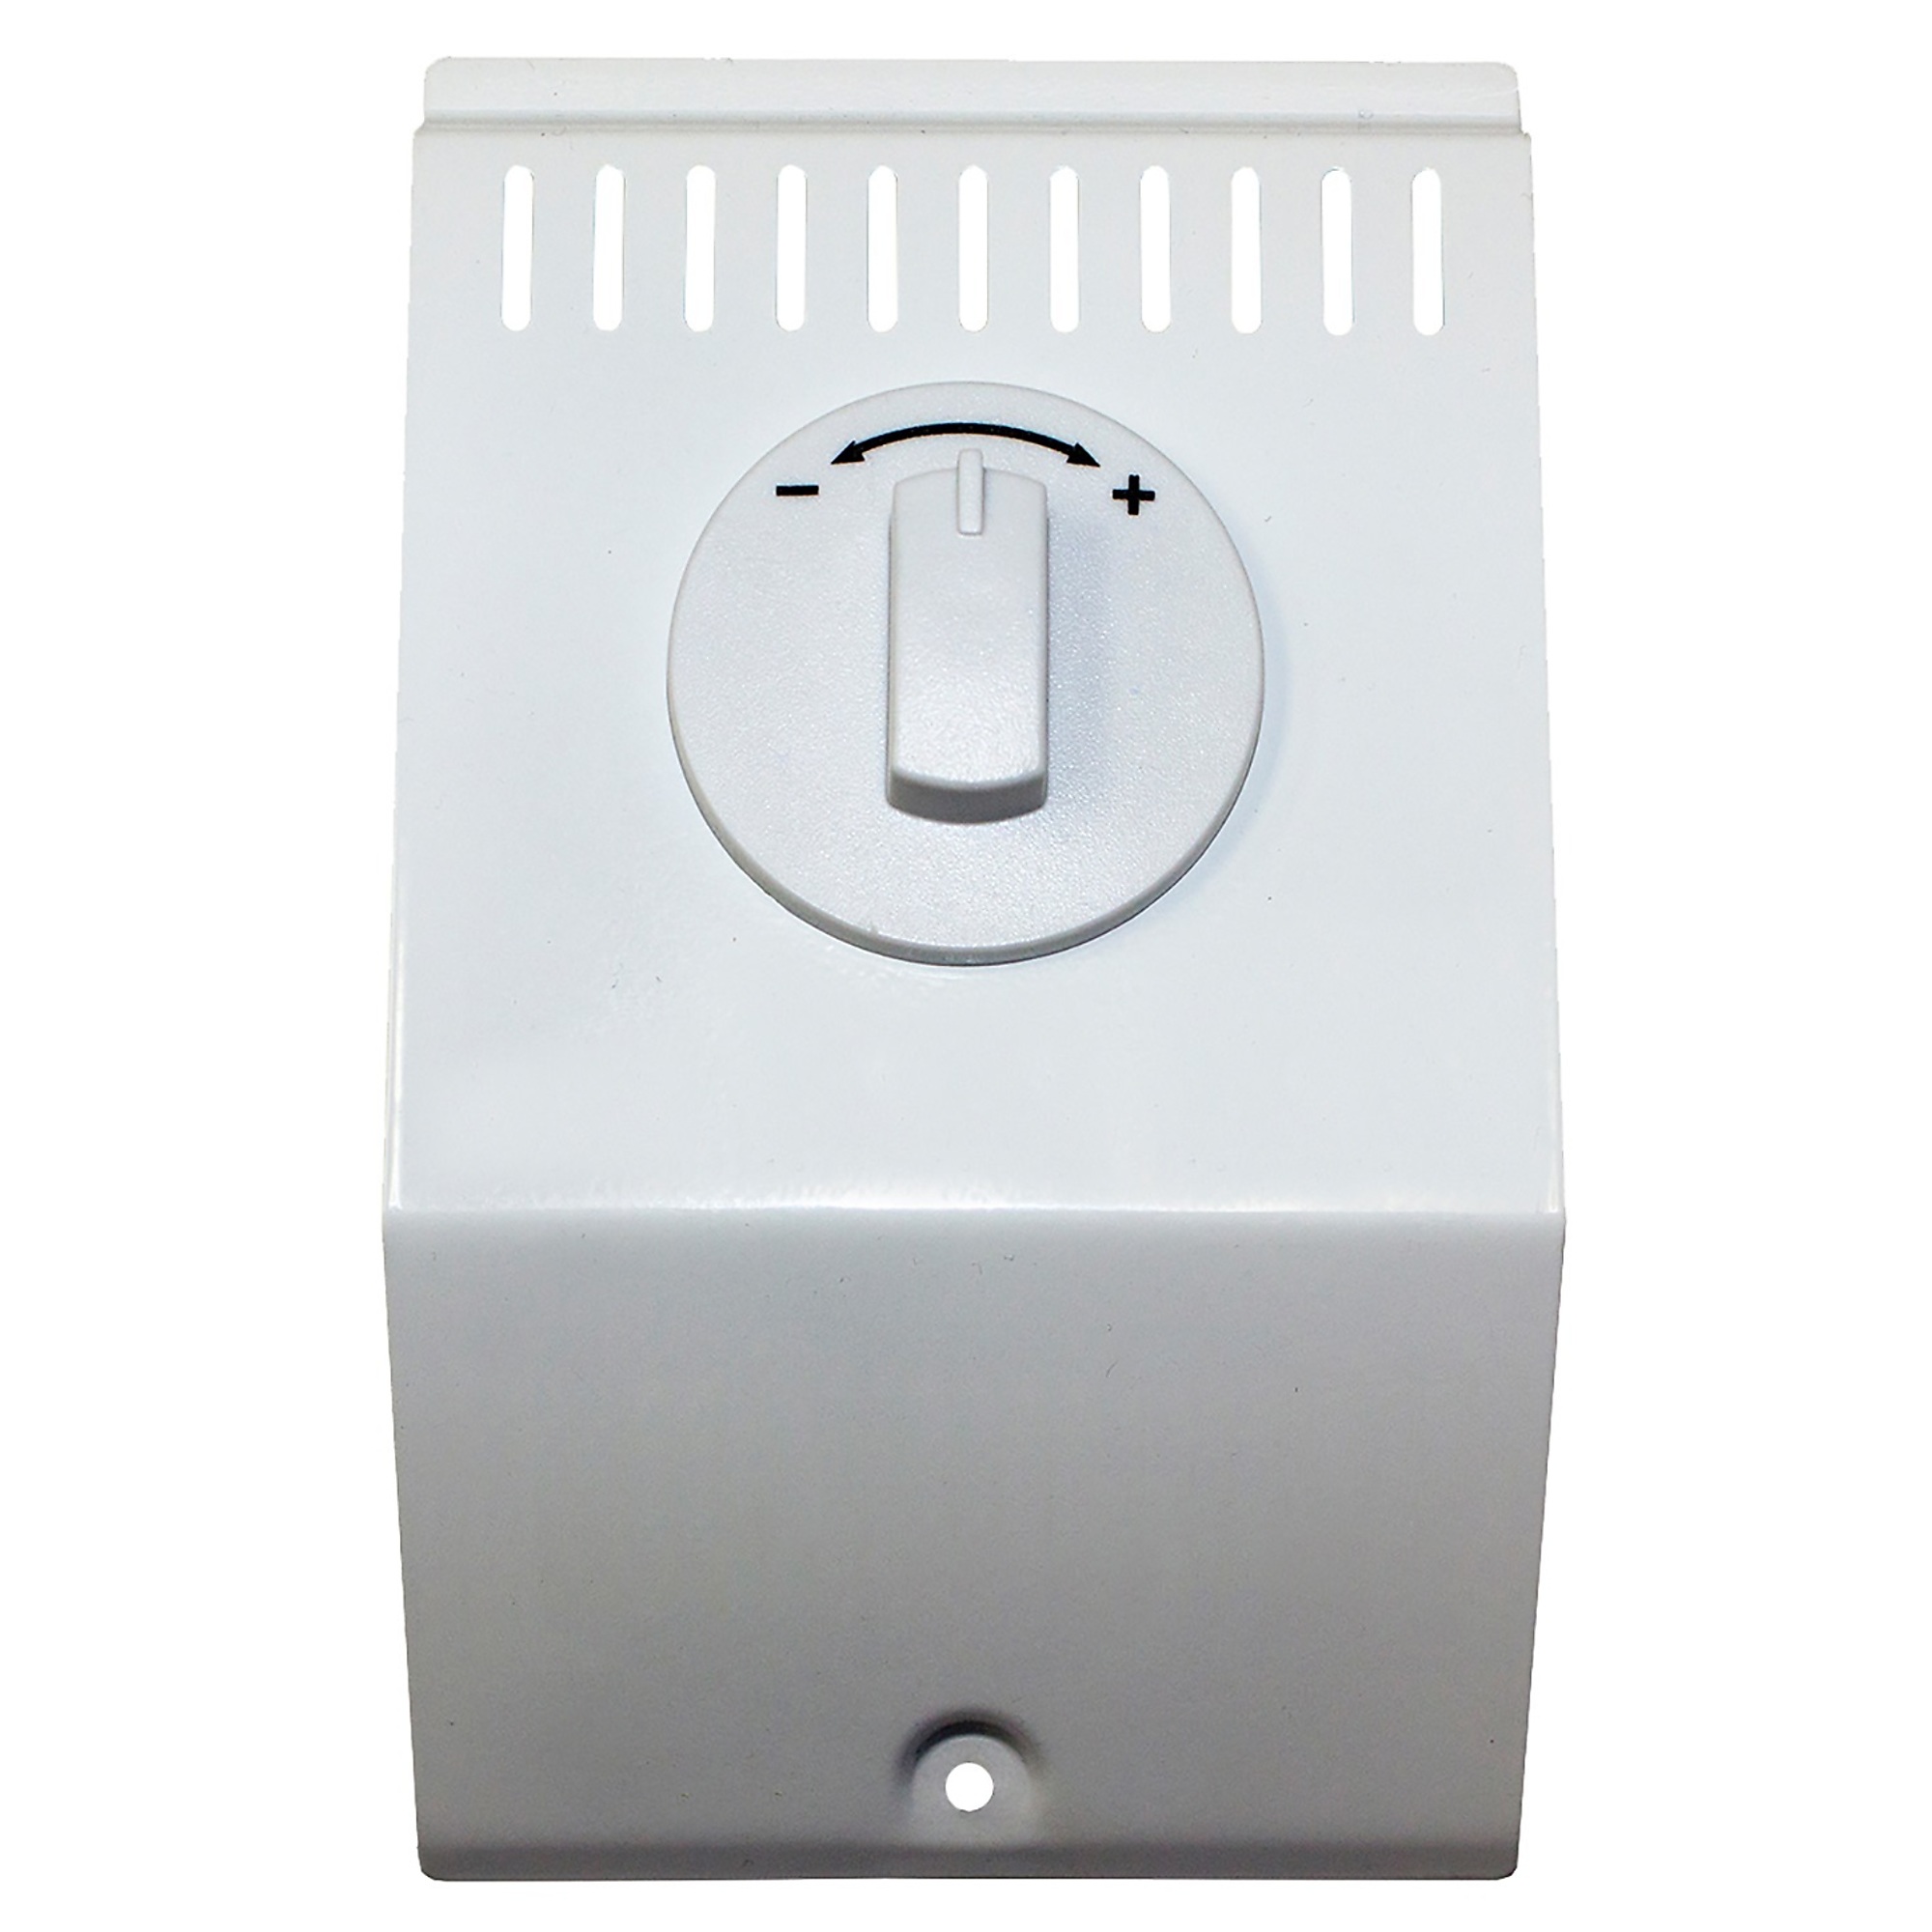 King Electrical K-Series Baseboard Thermostat Kit, White, Model BKT1BW